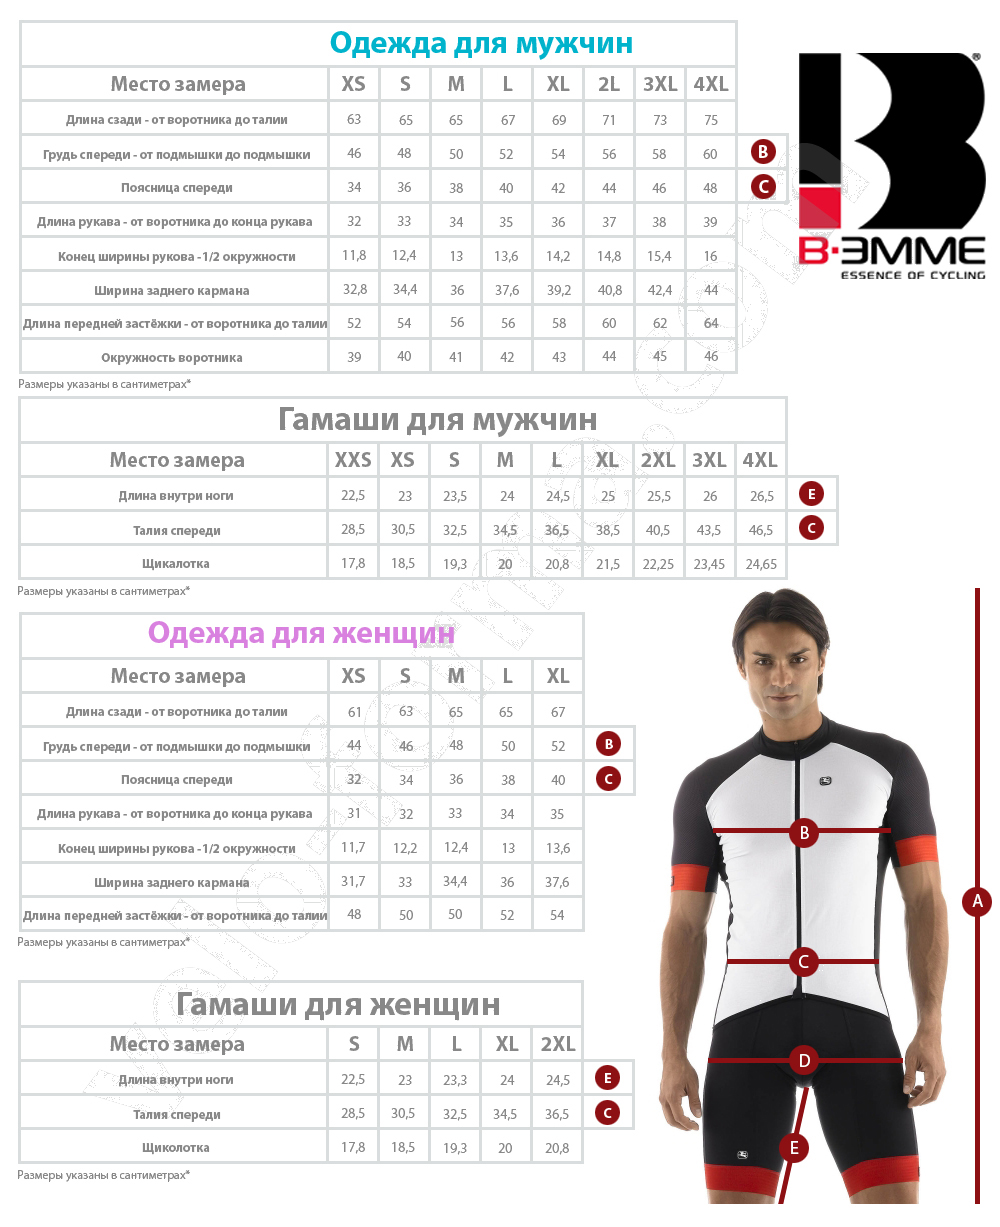 Таблица размеров для мужчины русский. Размерная сетка 52-54 мужской параметры. Таблица размеров мужской одежды. Мужские Размеры одежды. Таблица размеров одежды для мужчин.